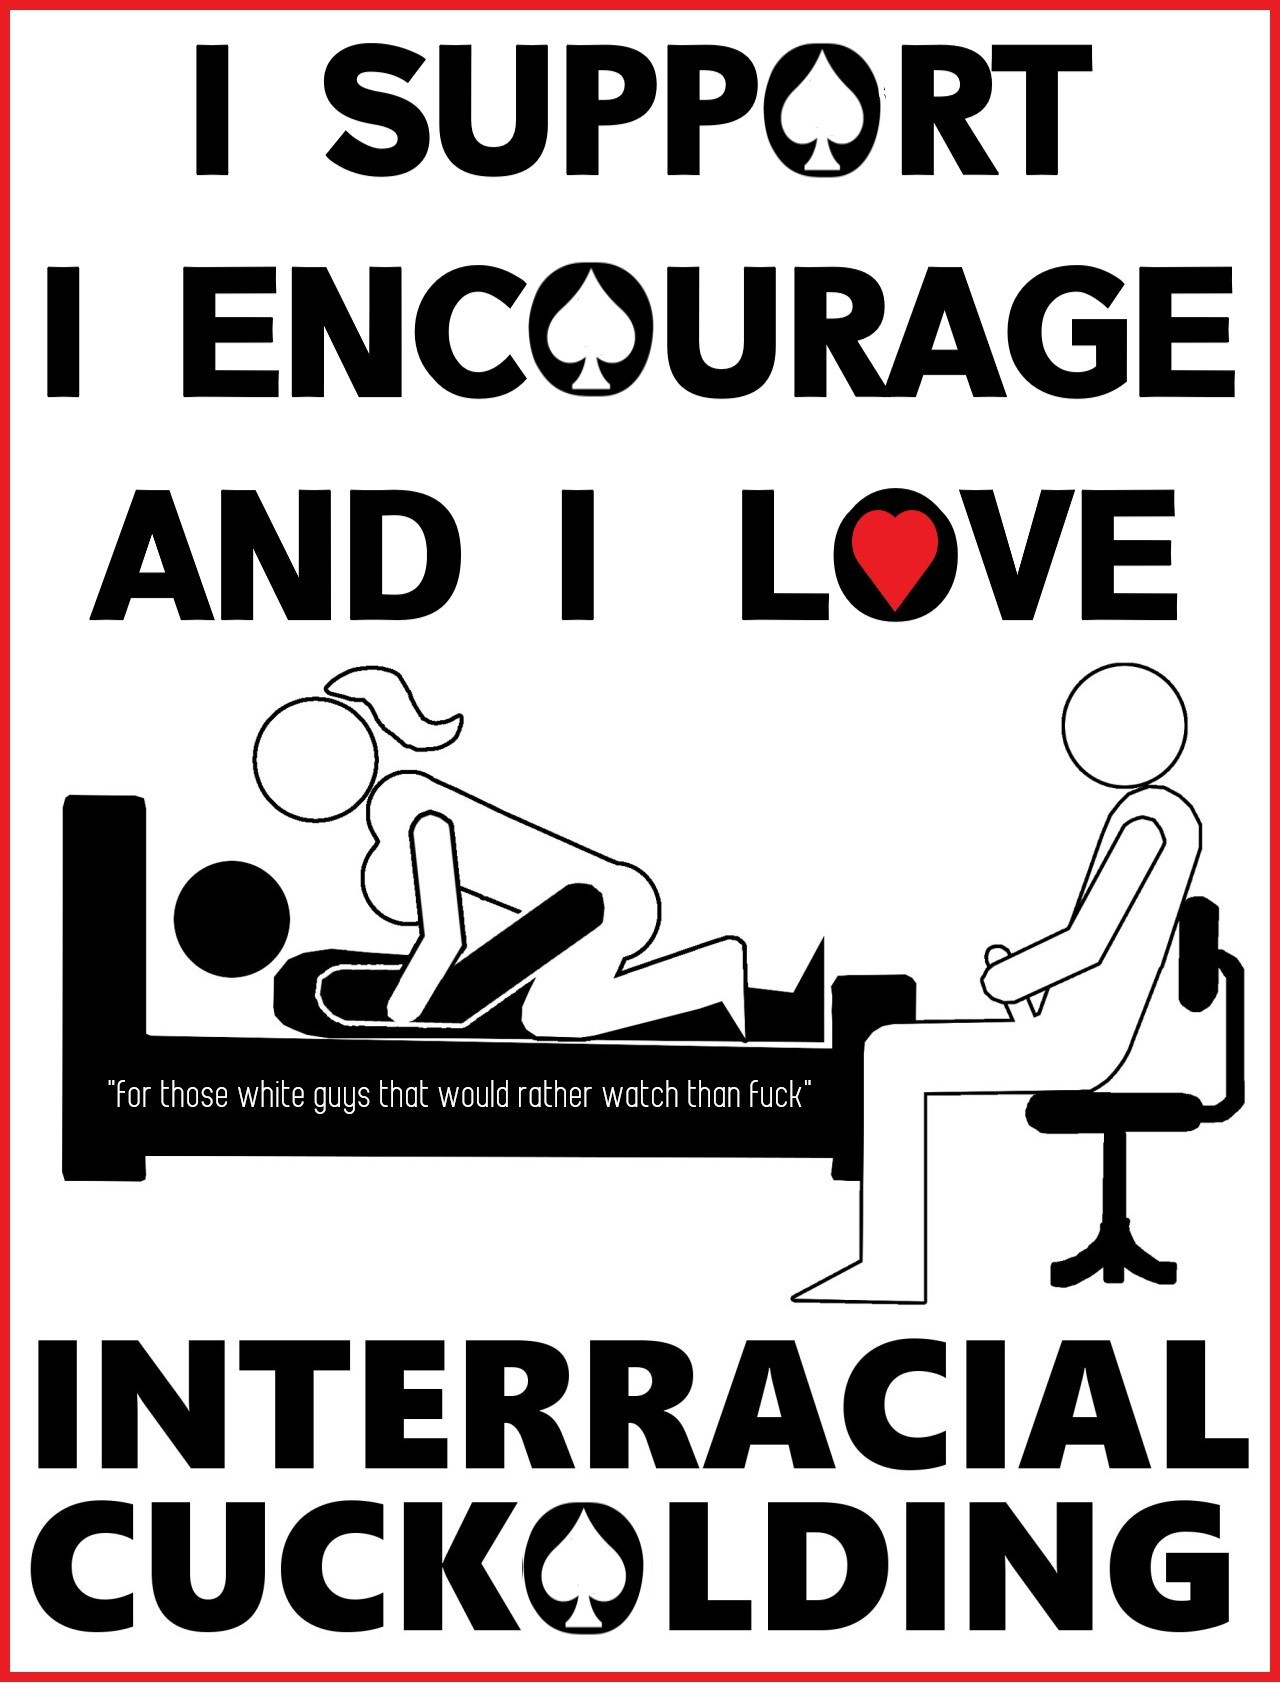 cuckold discussion forum interracial